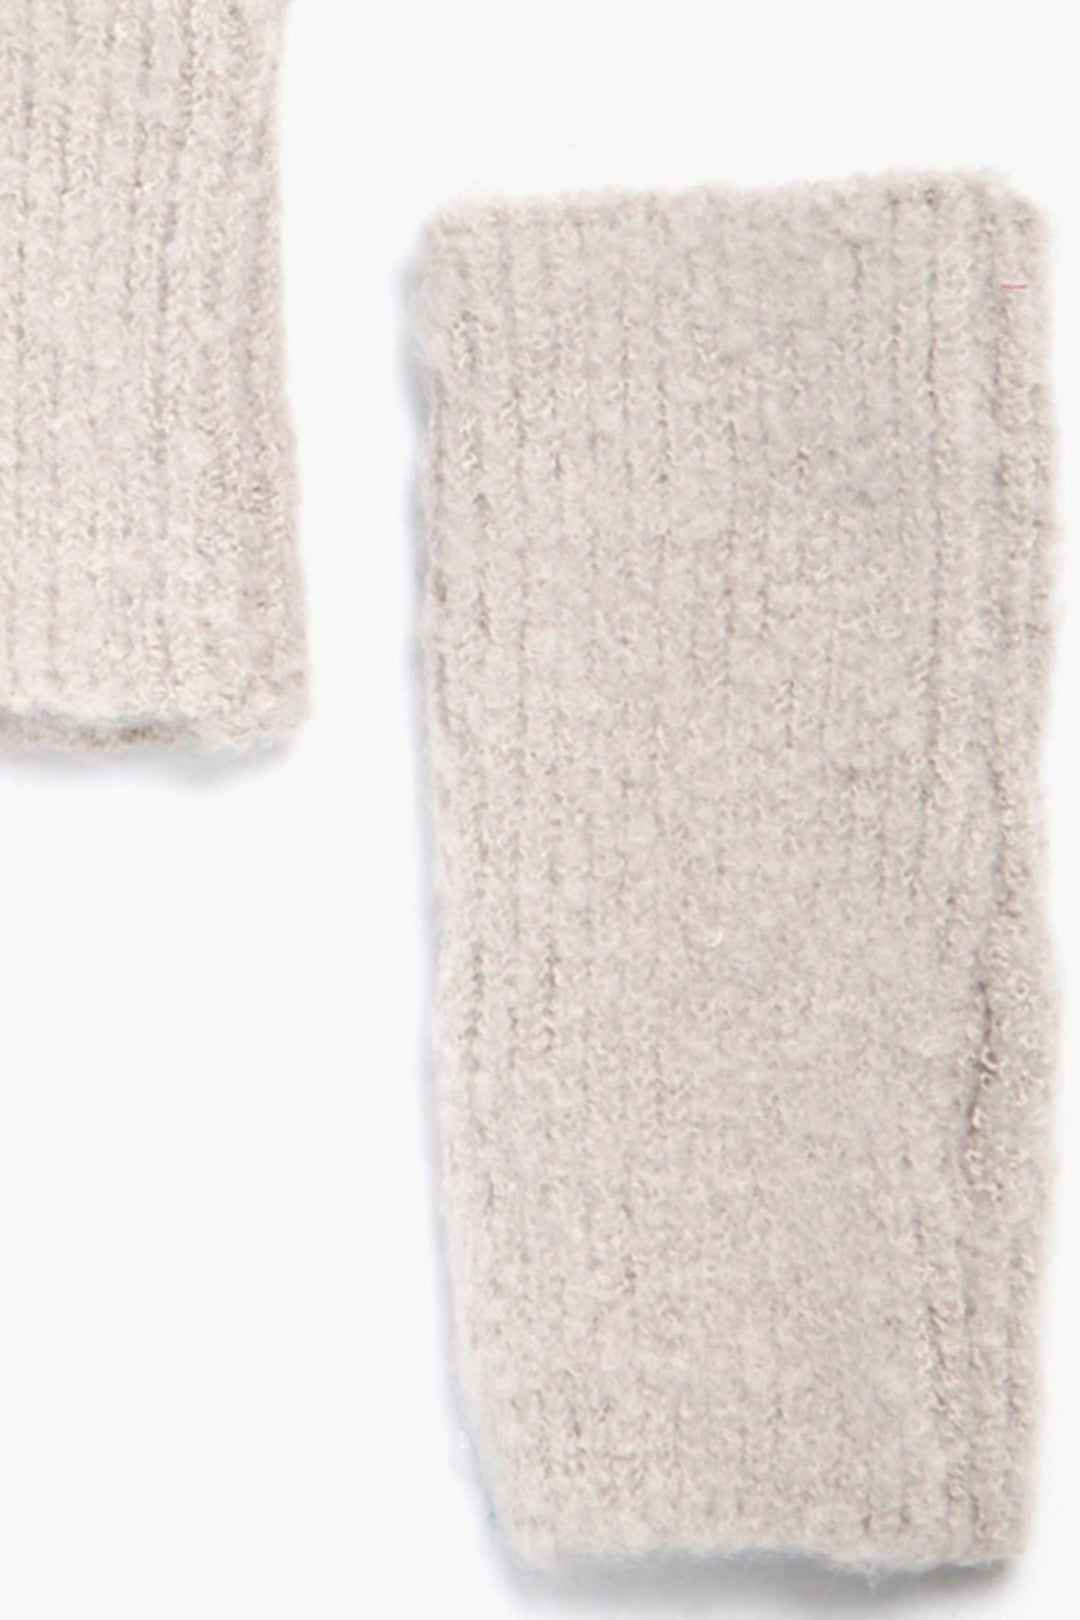 Cream Plain Textured Knitted Wrist Warmers